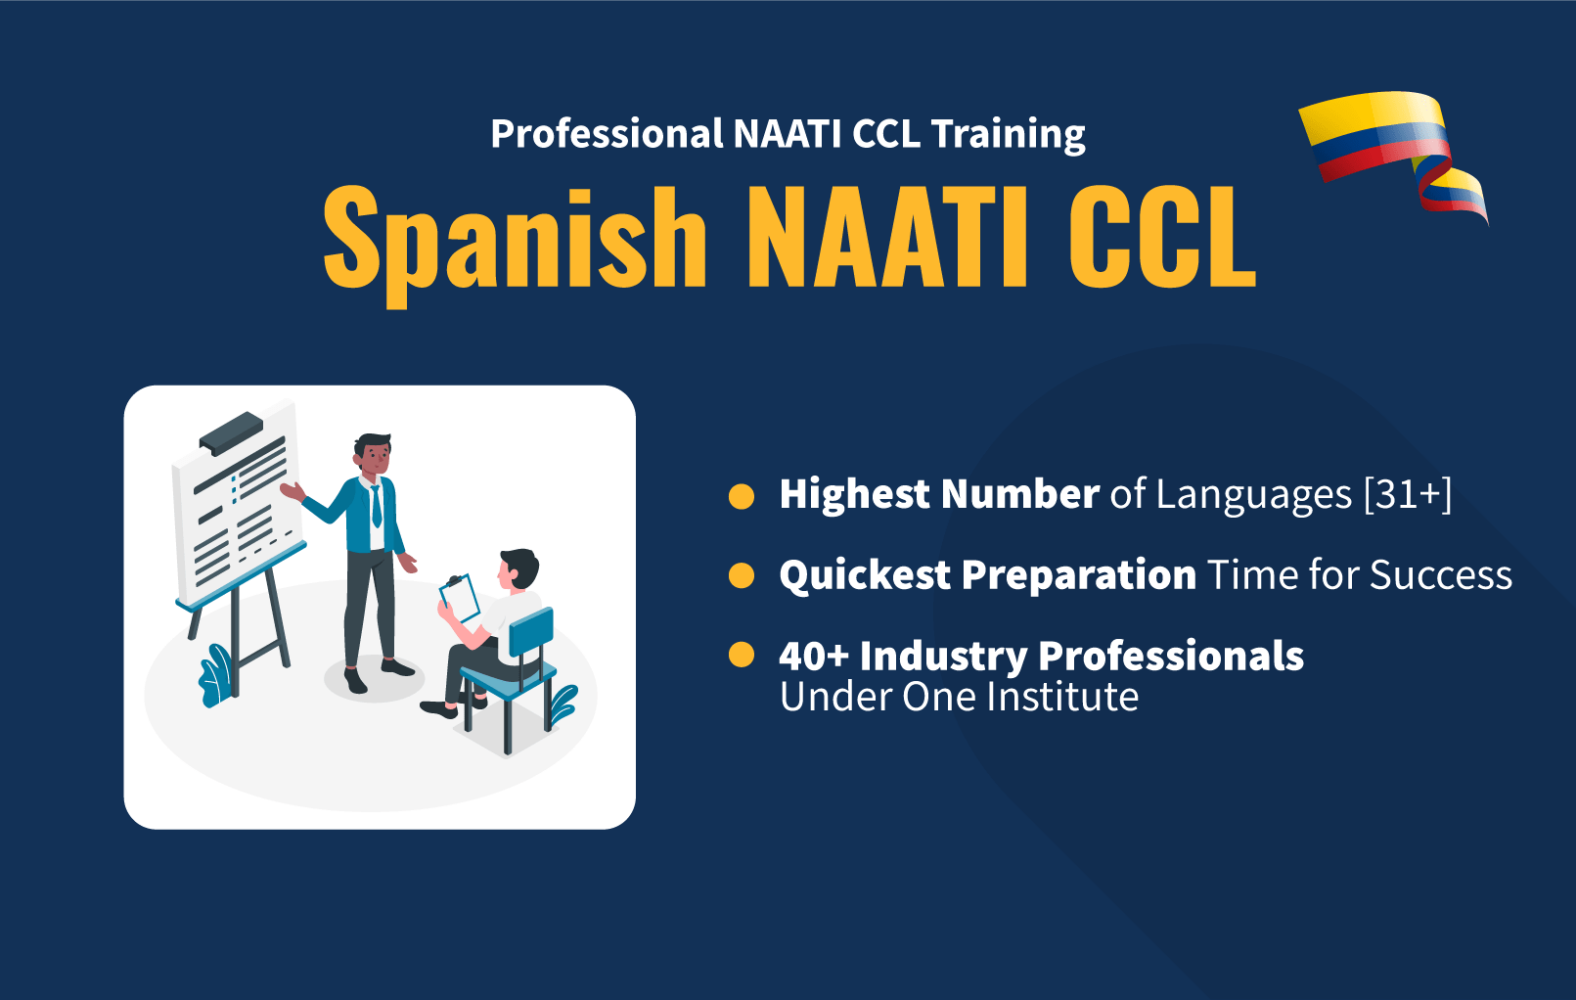 Spanish NAATI CCL image